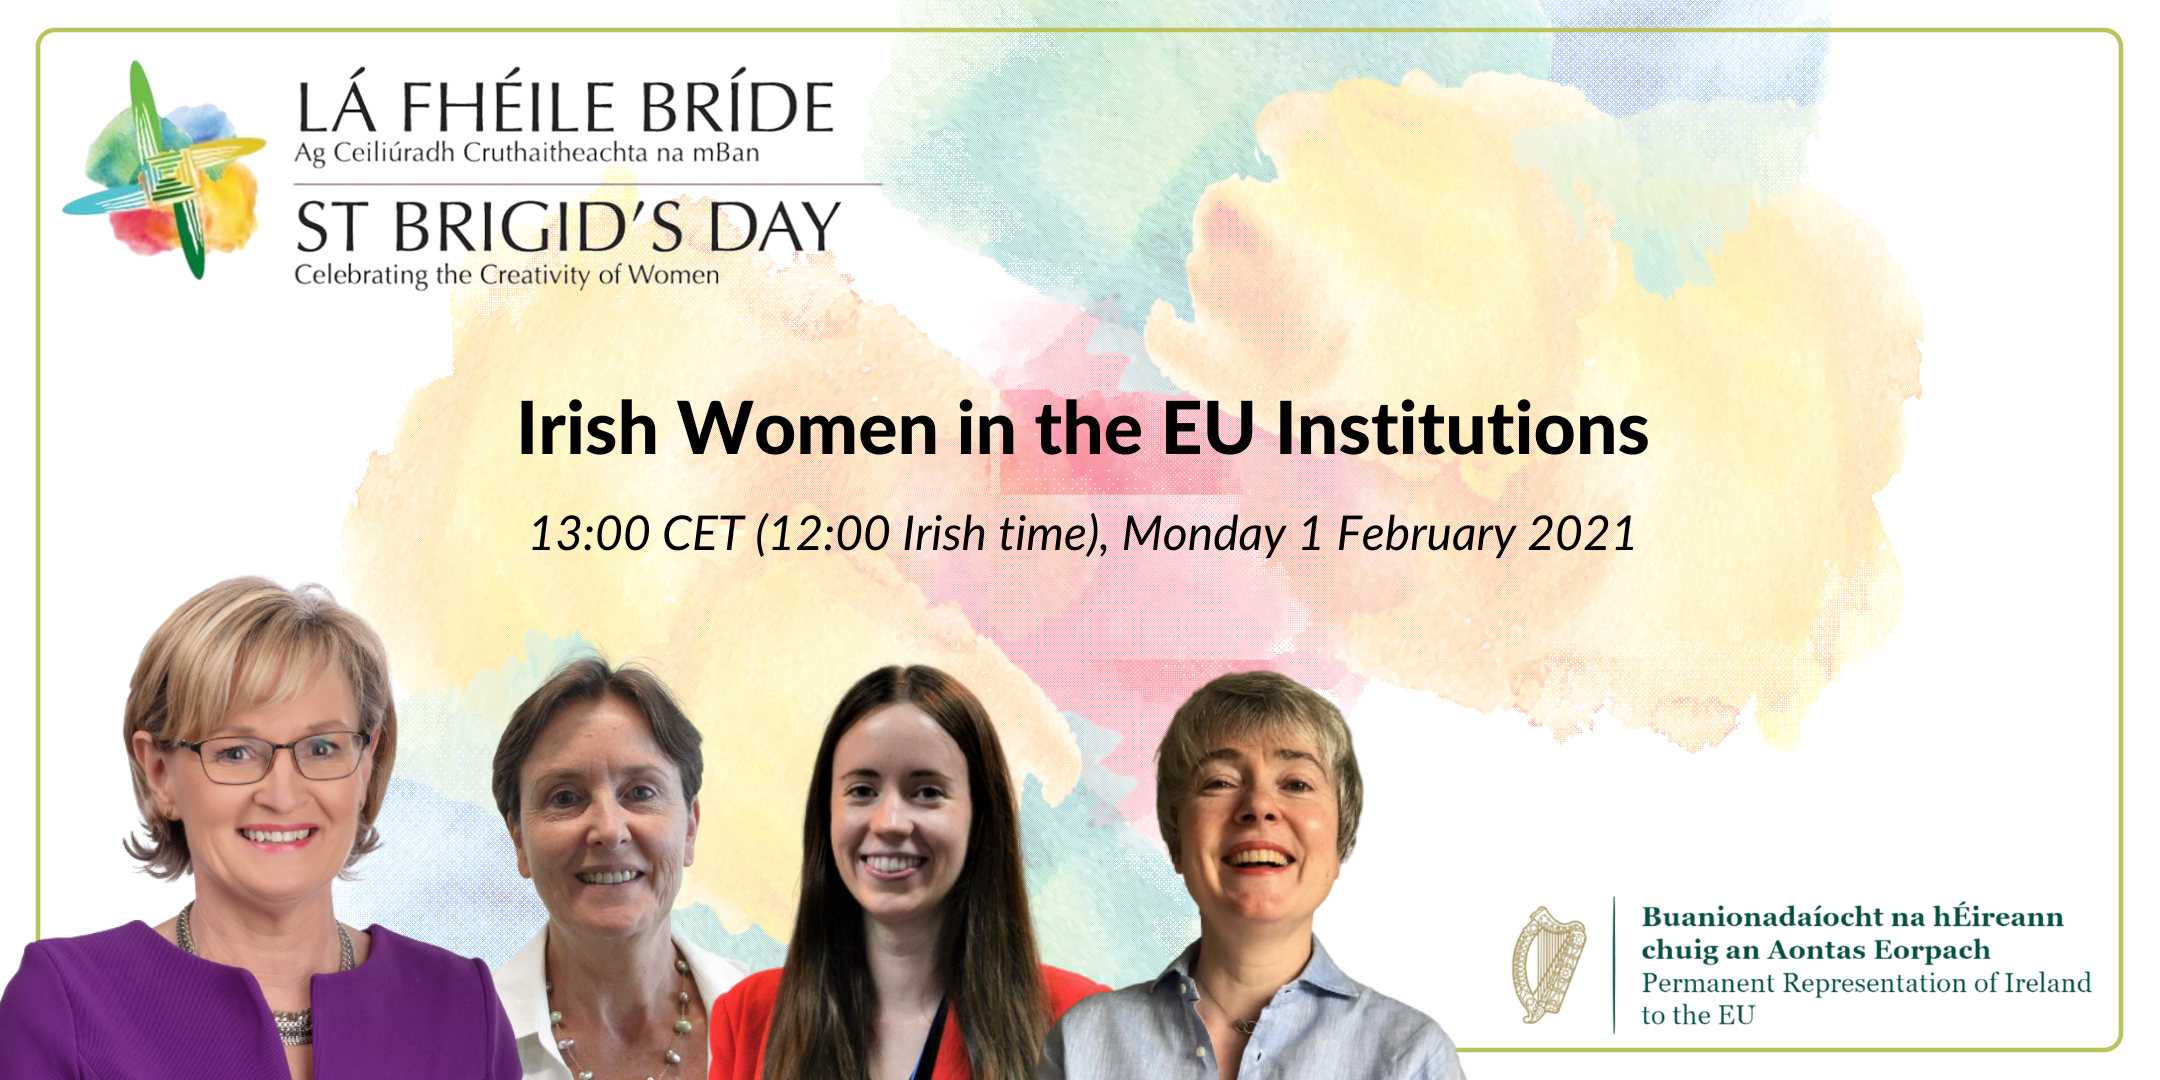 St. Brigid's Day 2021 at the Irish Perm Rep: Irish Women in the EU Institutions